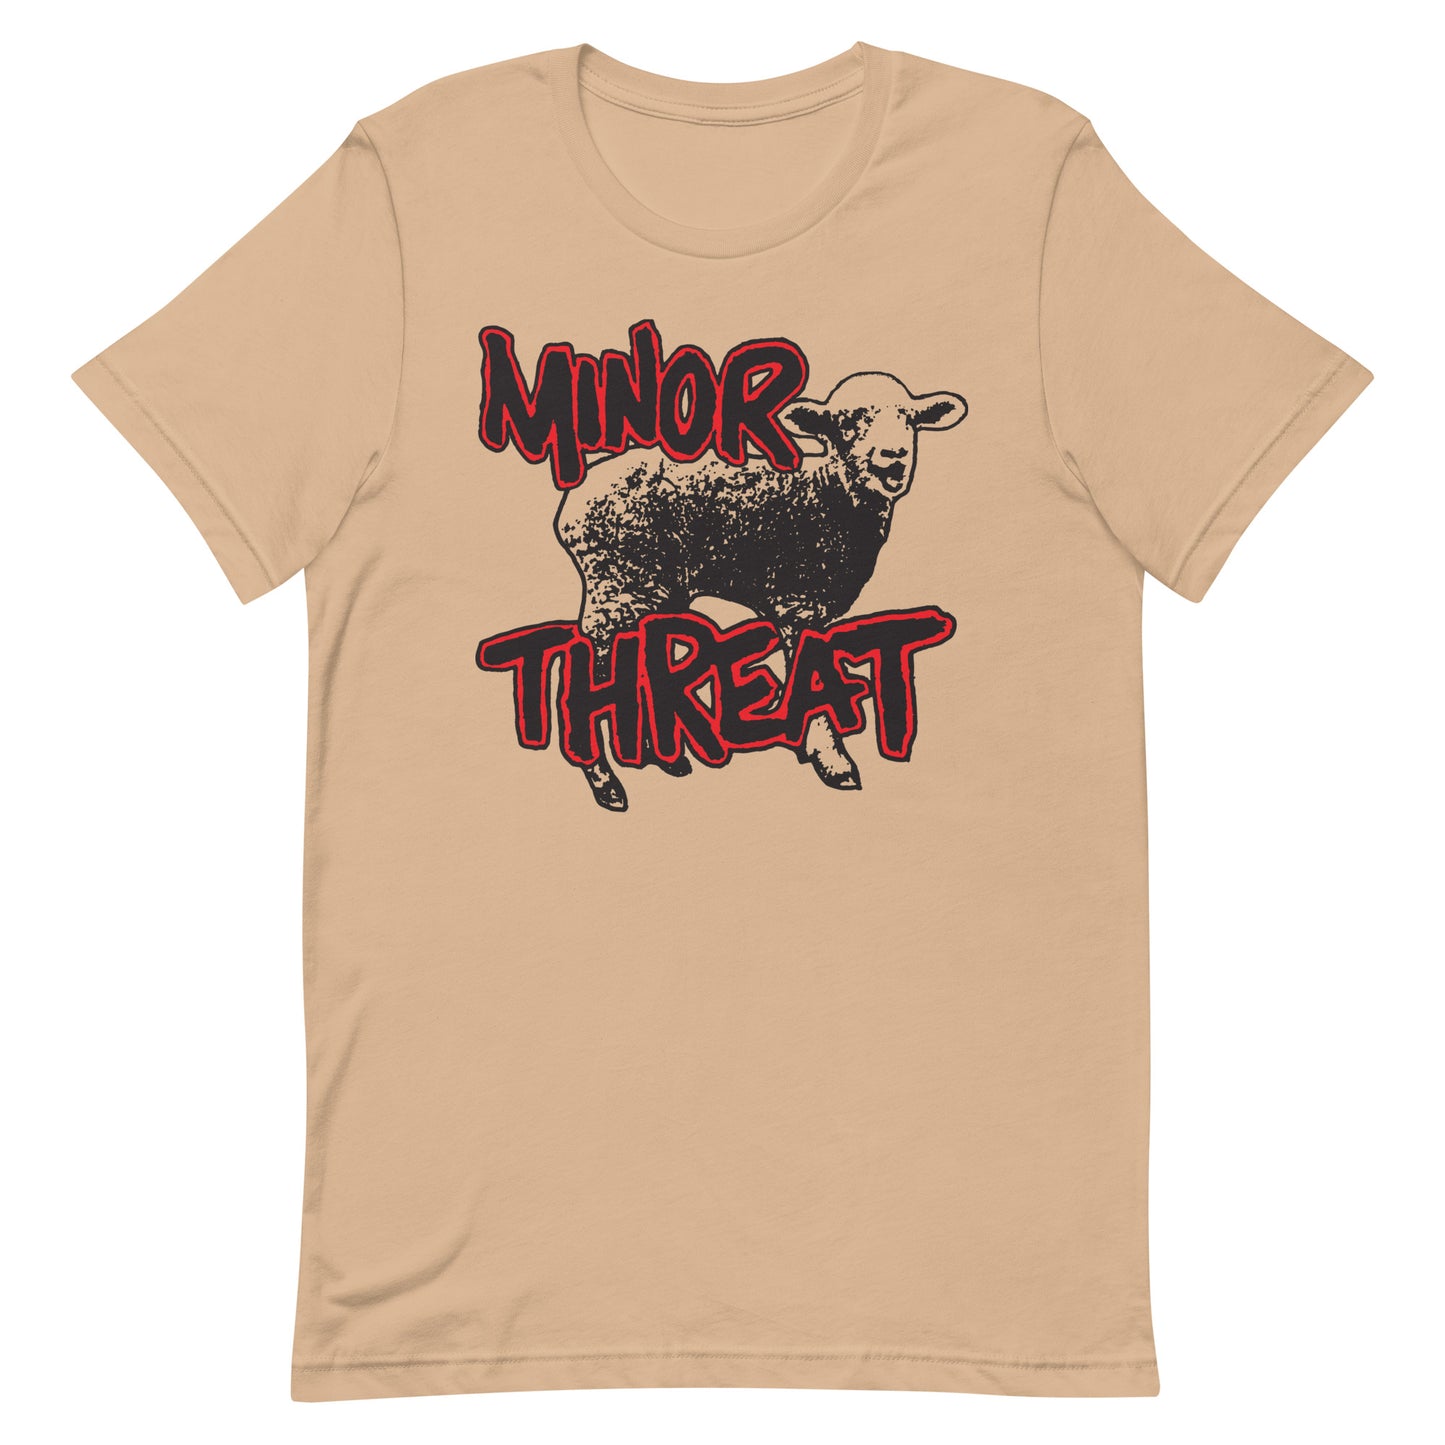 Minor Threat - Sheep T-Shirt